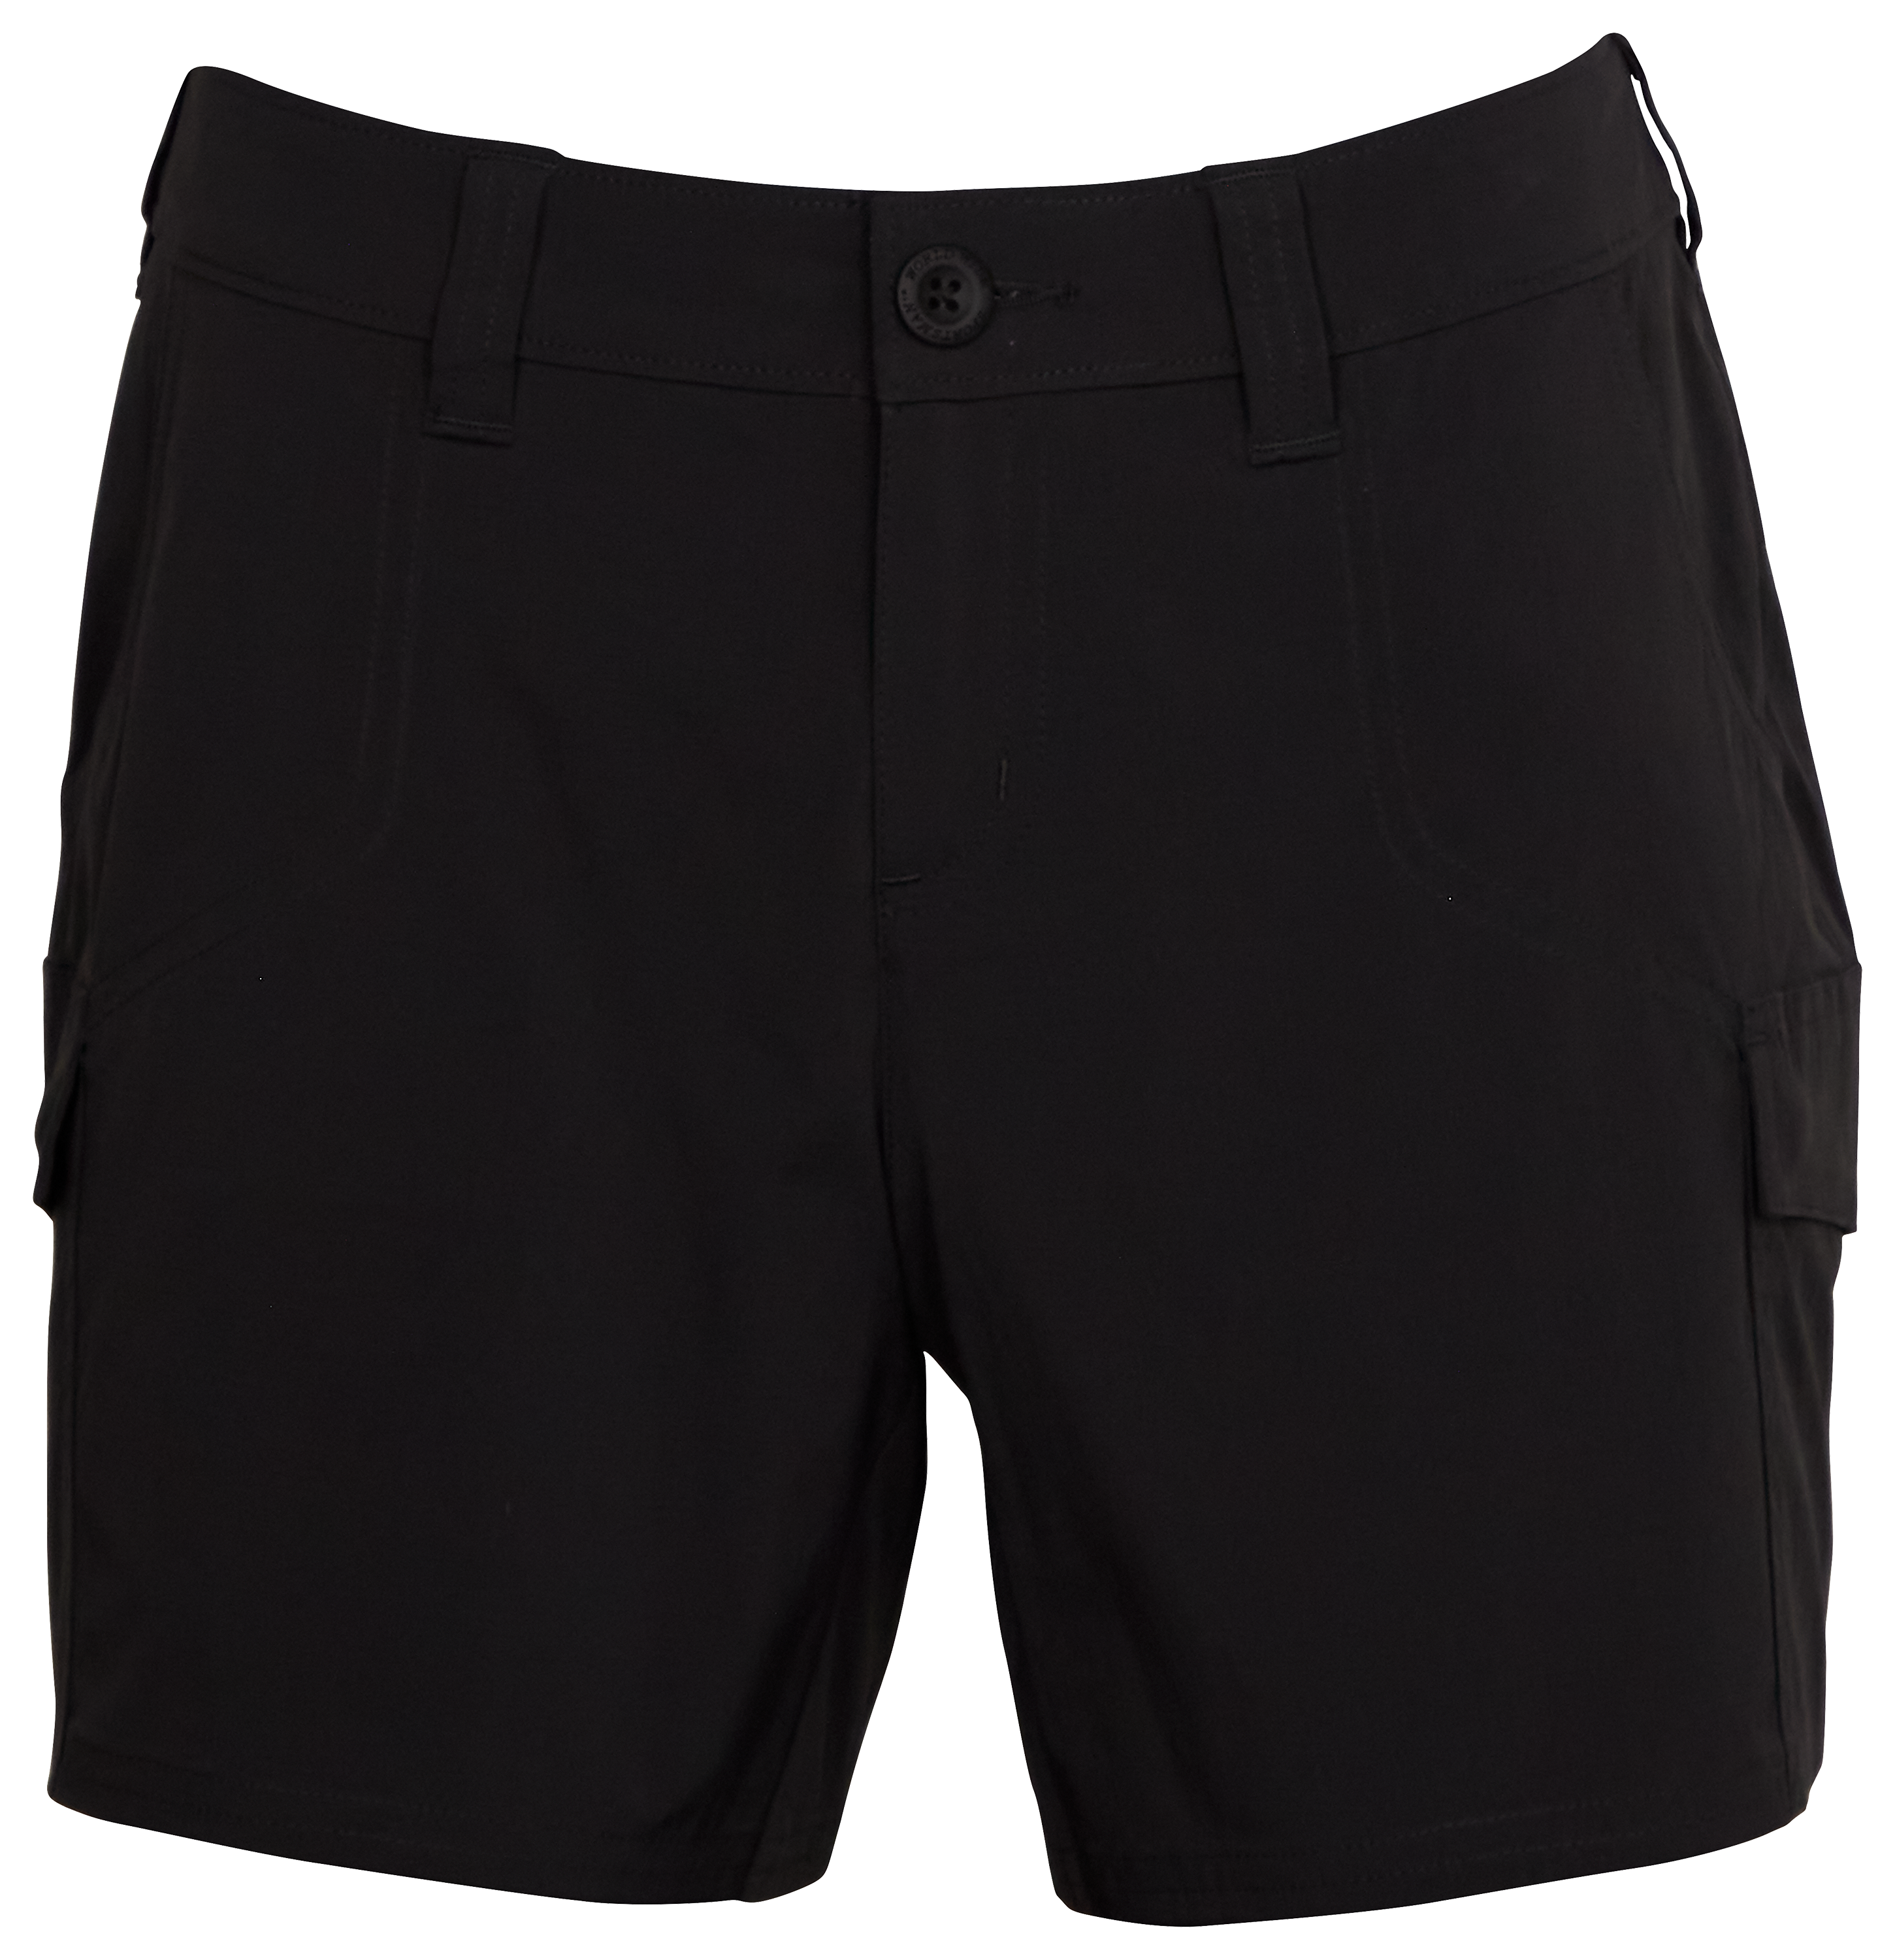 World Wide Sportsman Ripstop Cargo Shorts for Ladies - Jet Black - 14